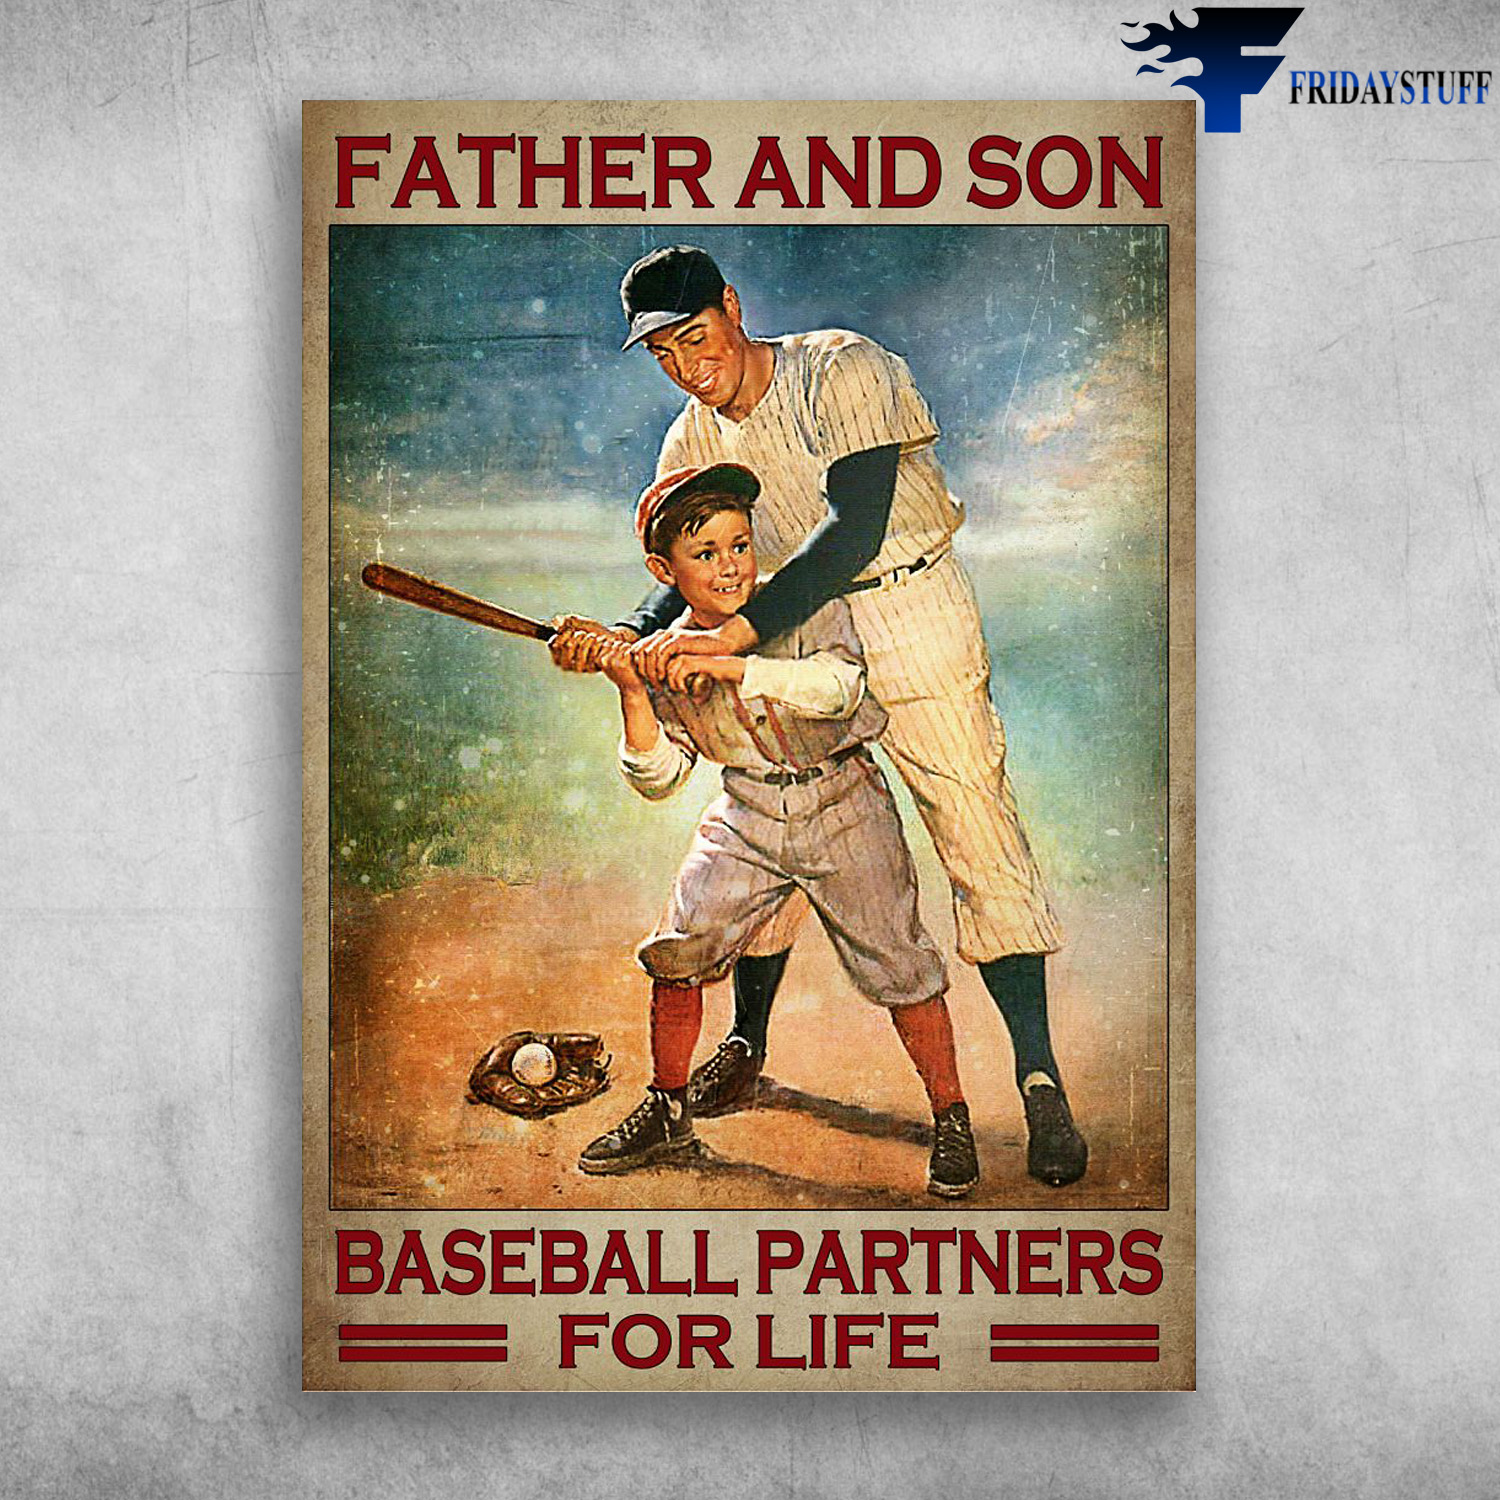 Dad And Son Baseball - Father And Son, Baseball Partners For life